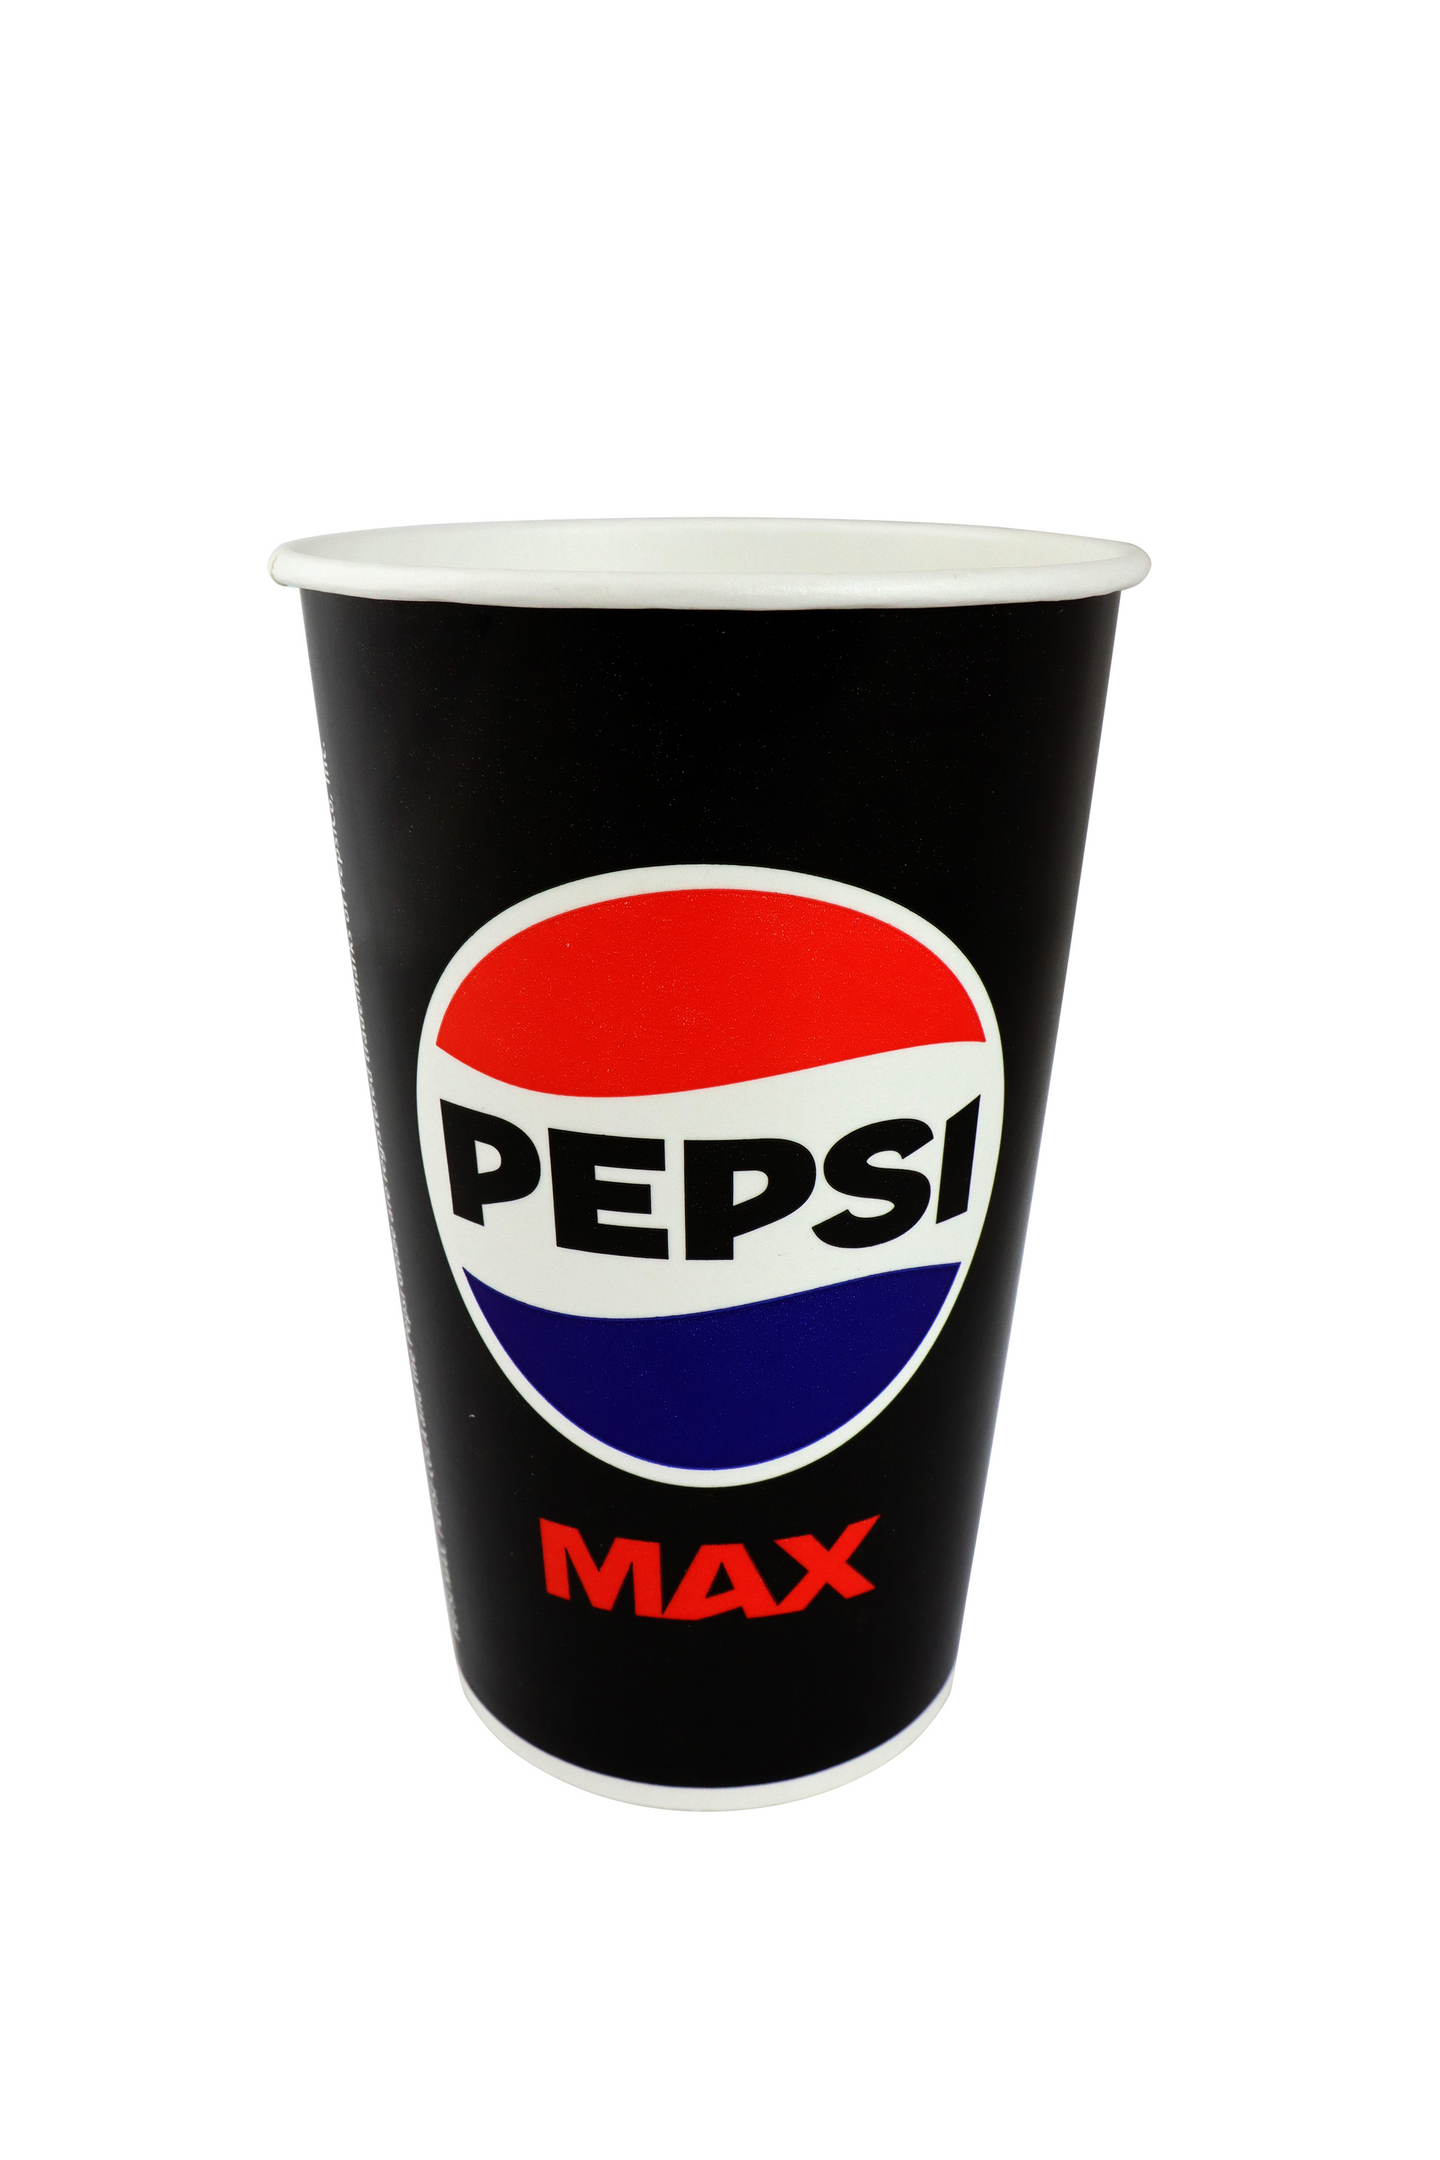 Huhtamaki Pepsi Max kylmäjuomapikari 400ml 50kpl